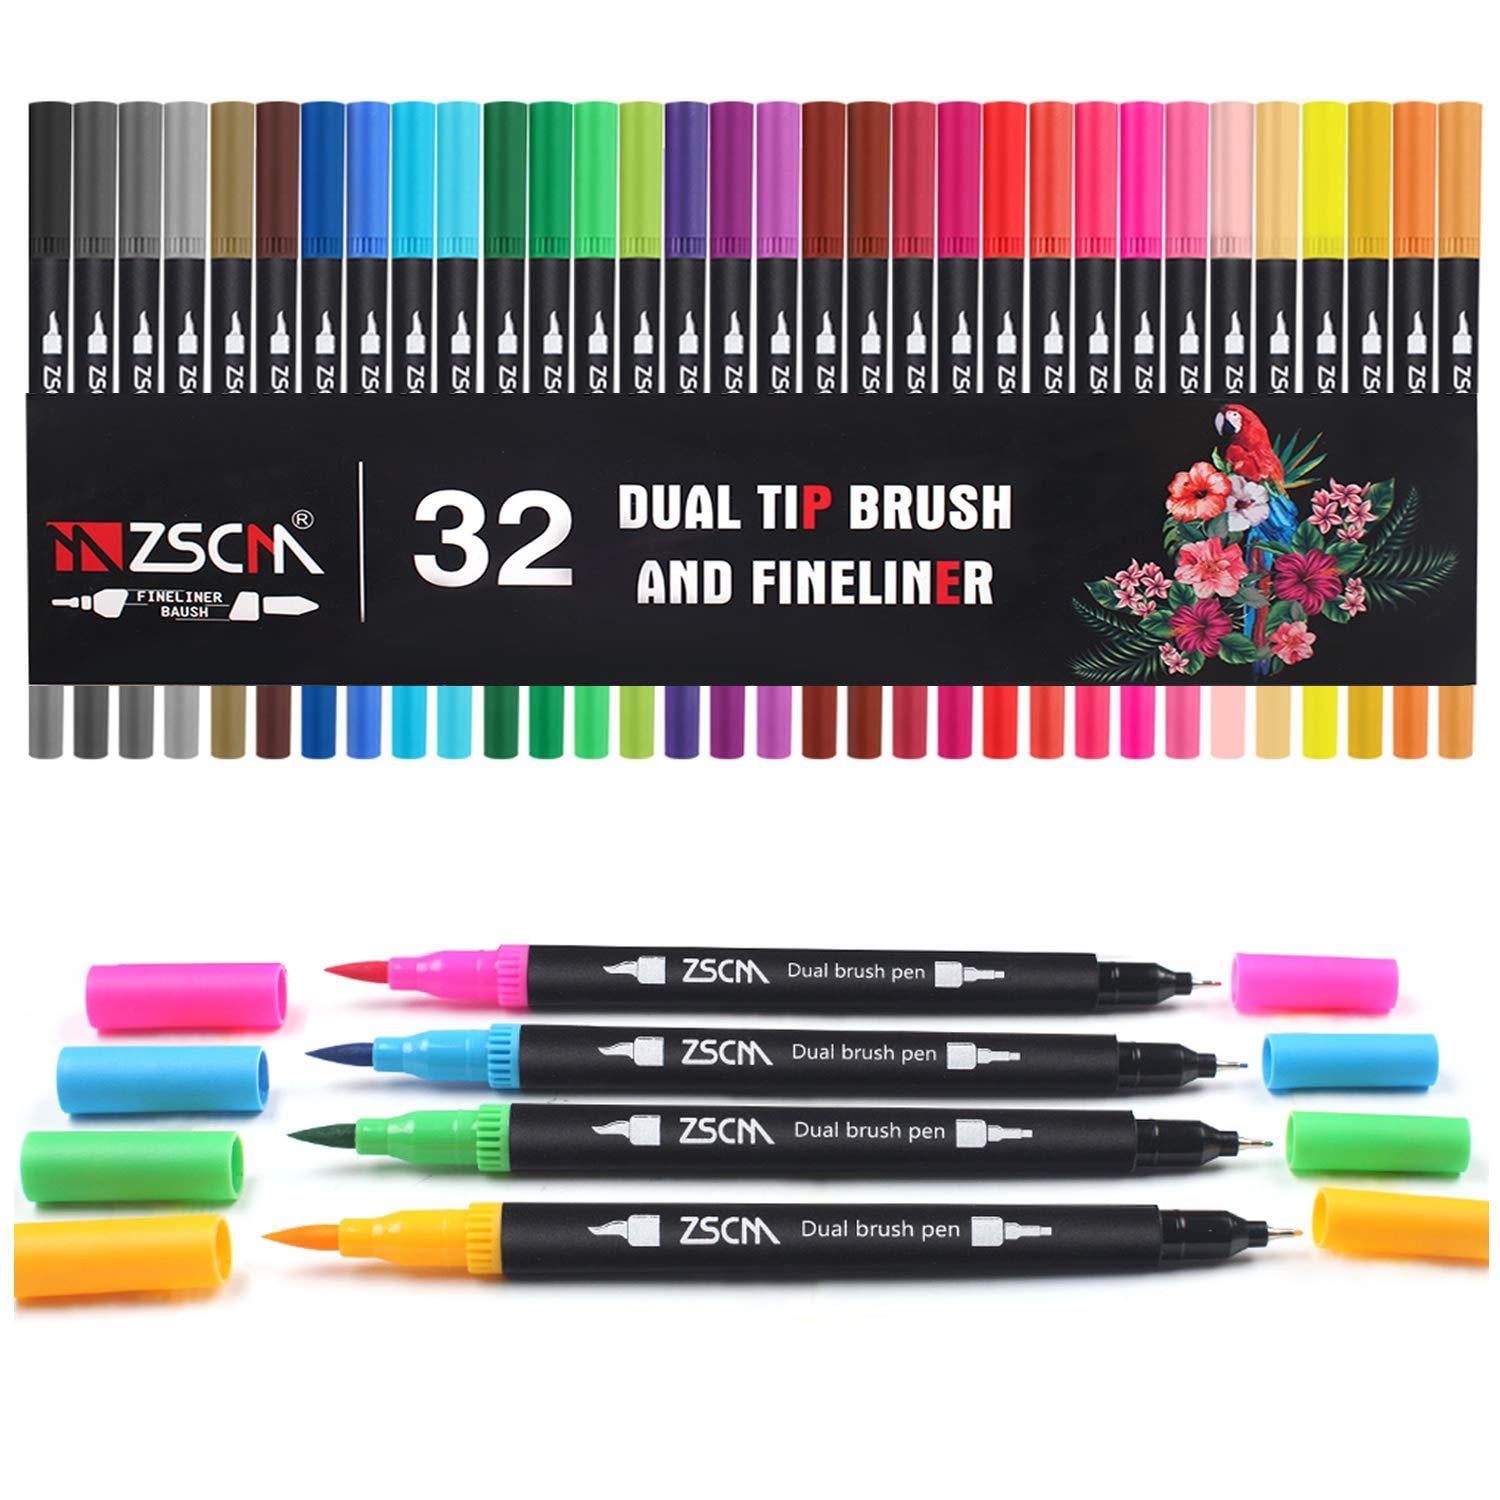 10 Colors Brush Twin Tip Markers Pen Set Graphic Artist Paint Art Dual Tip 